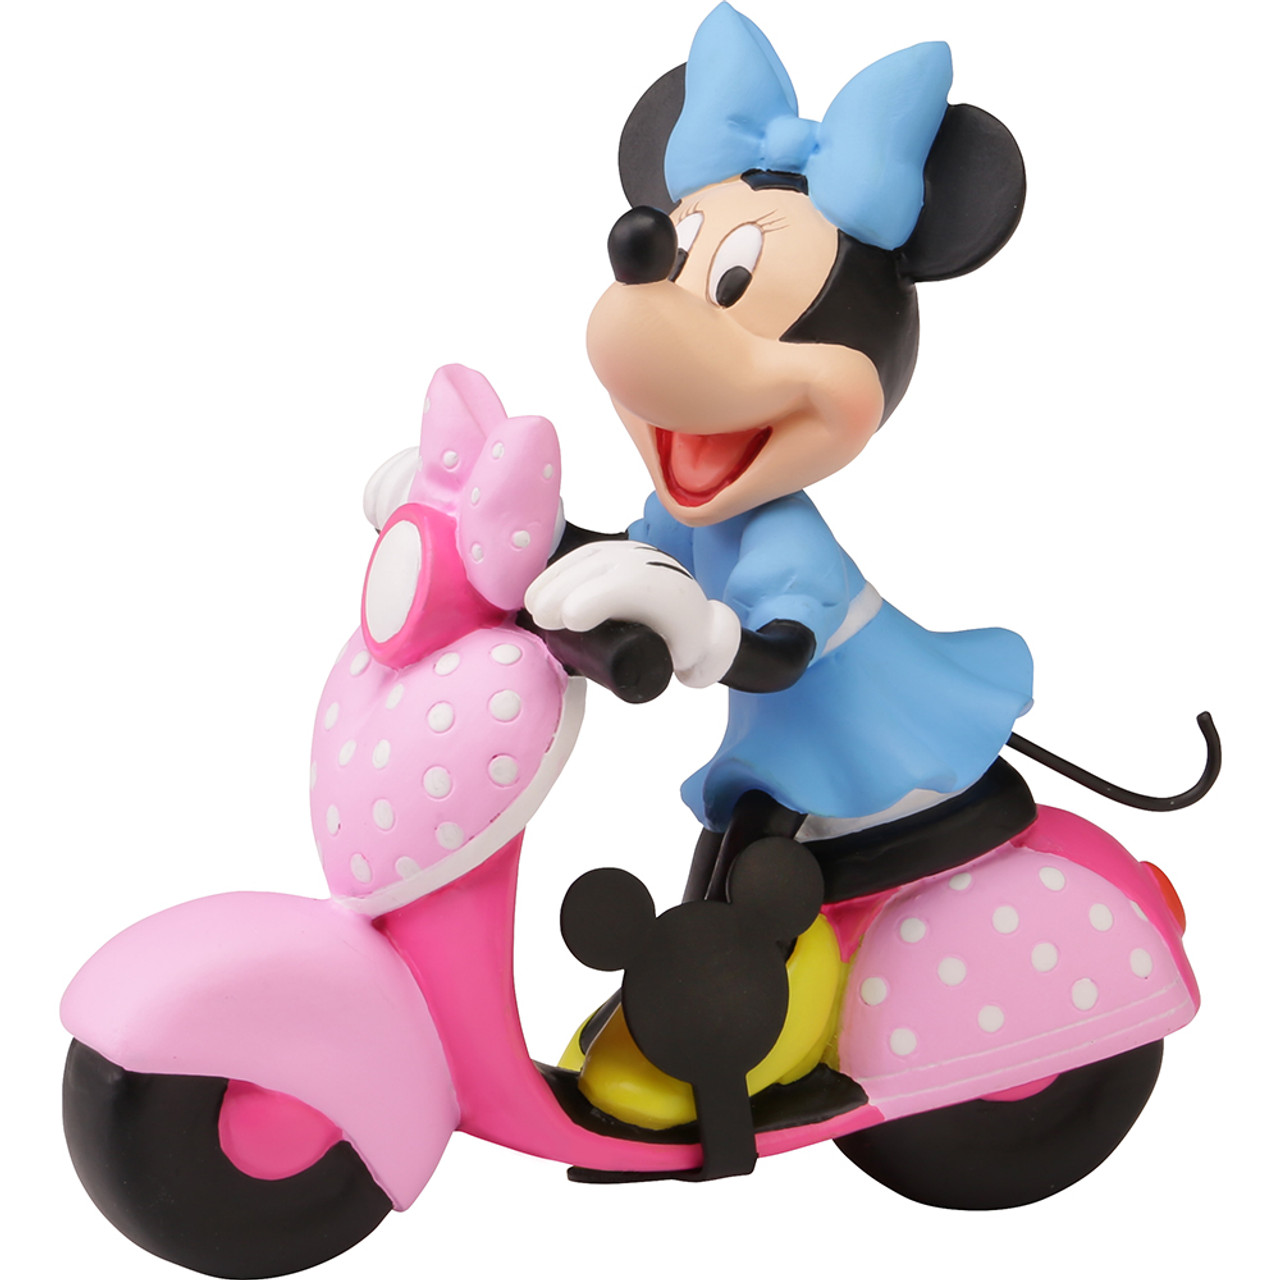 Resin/Vinyl Moments Precious Collectible Mouse Disney Showcase Figurine Minnie 201708 Parade Disney